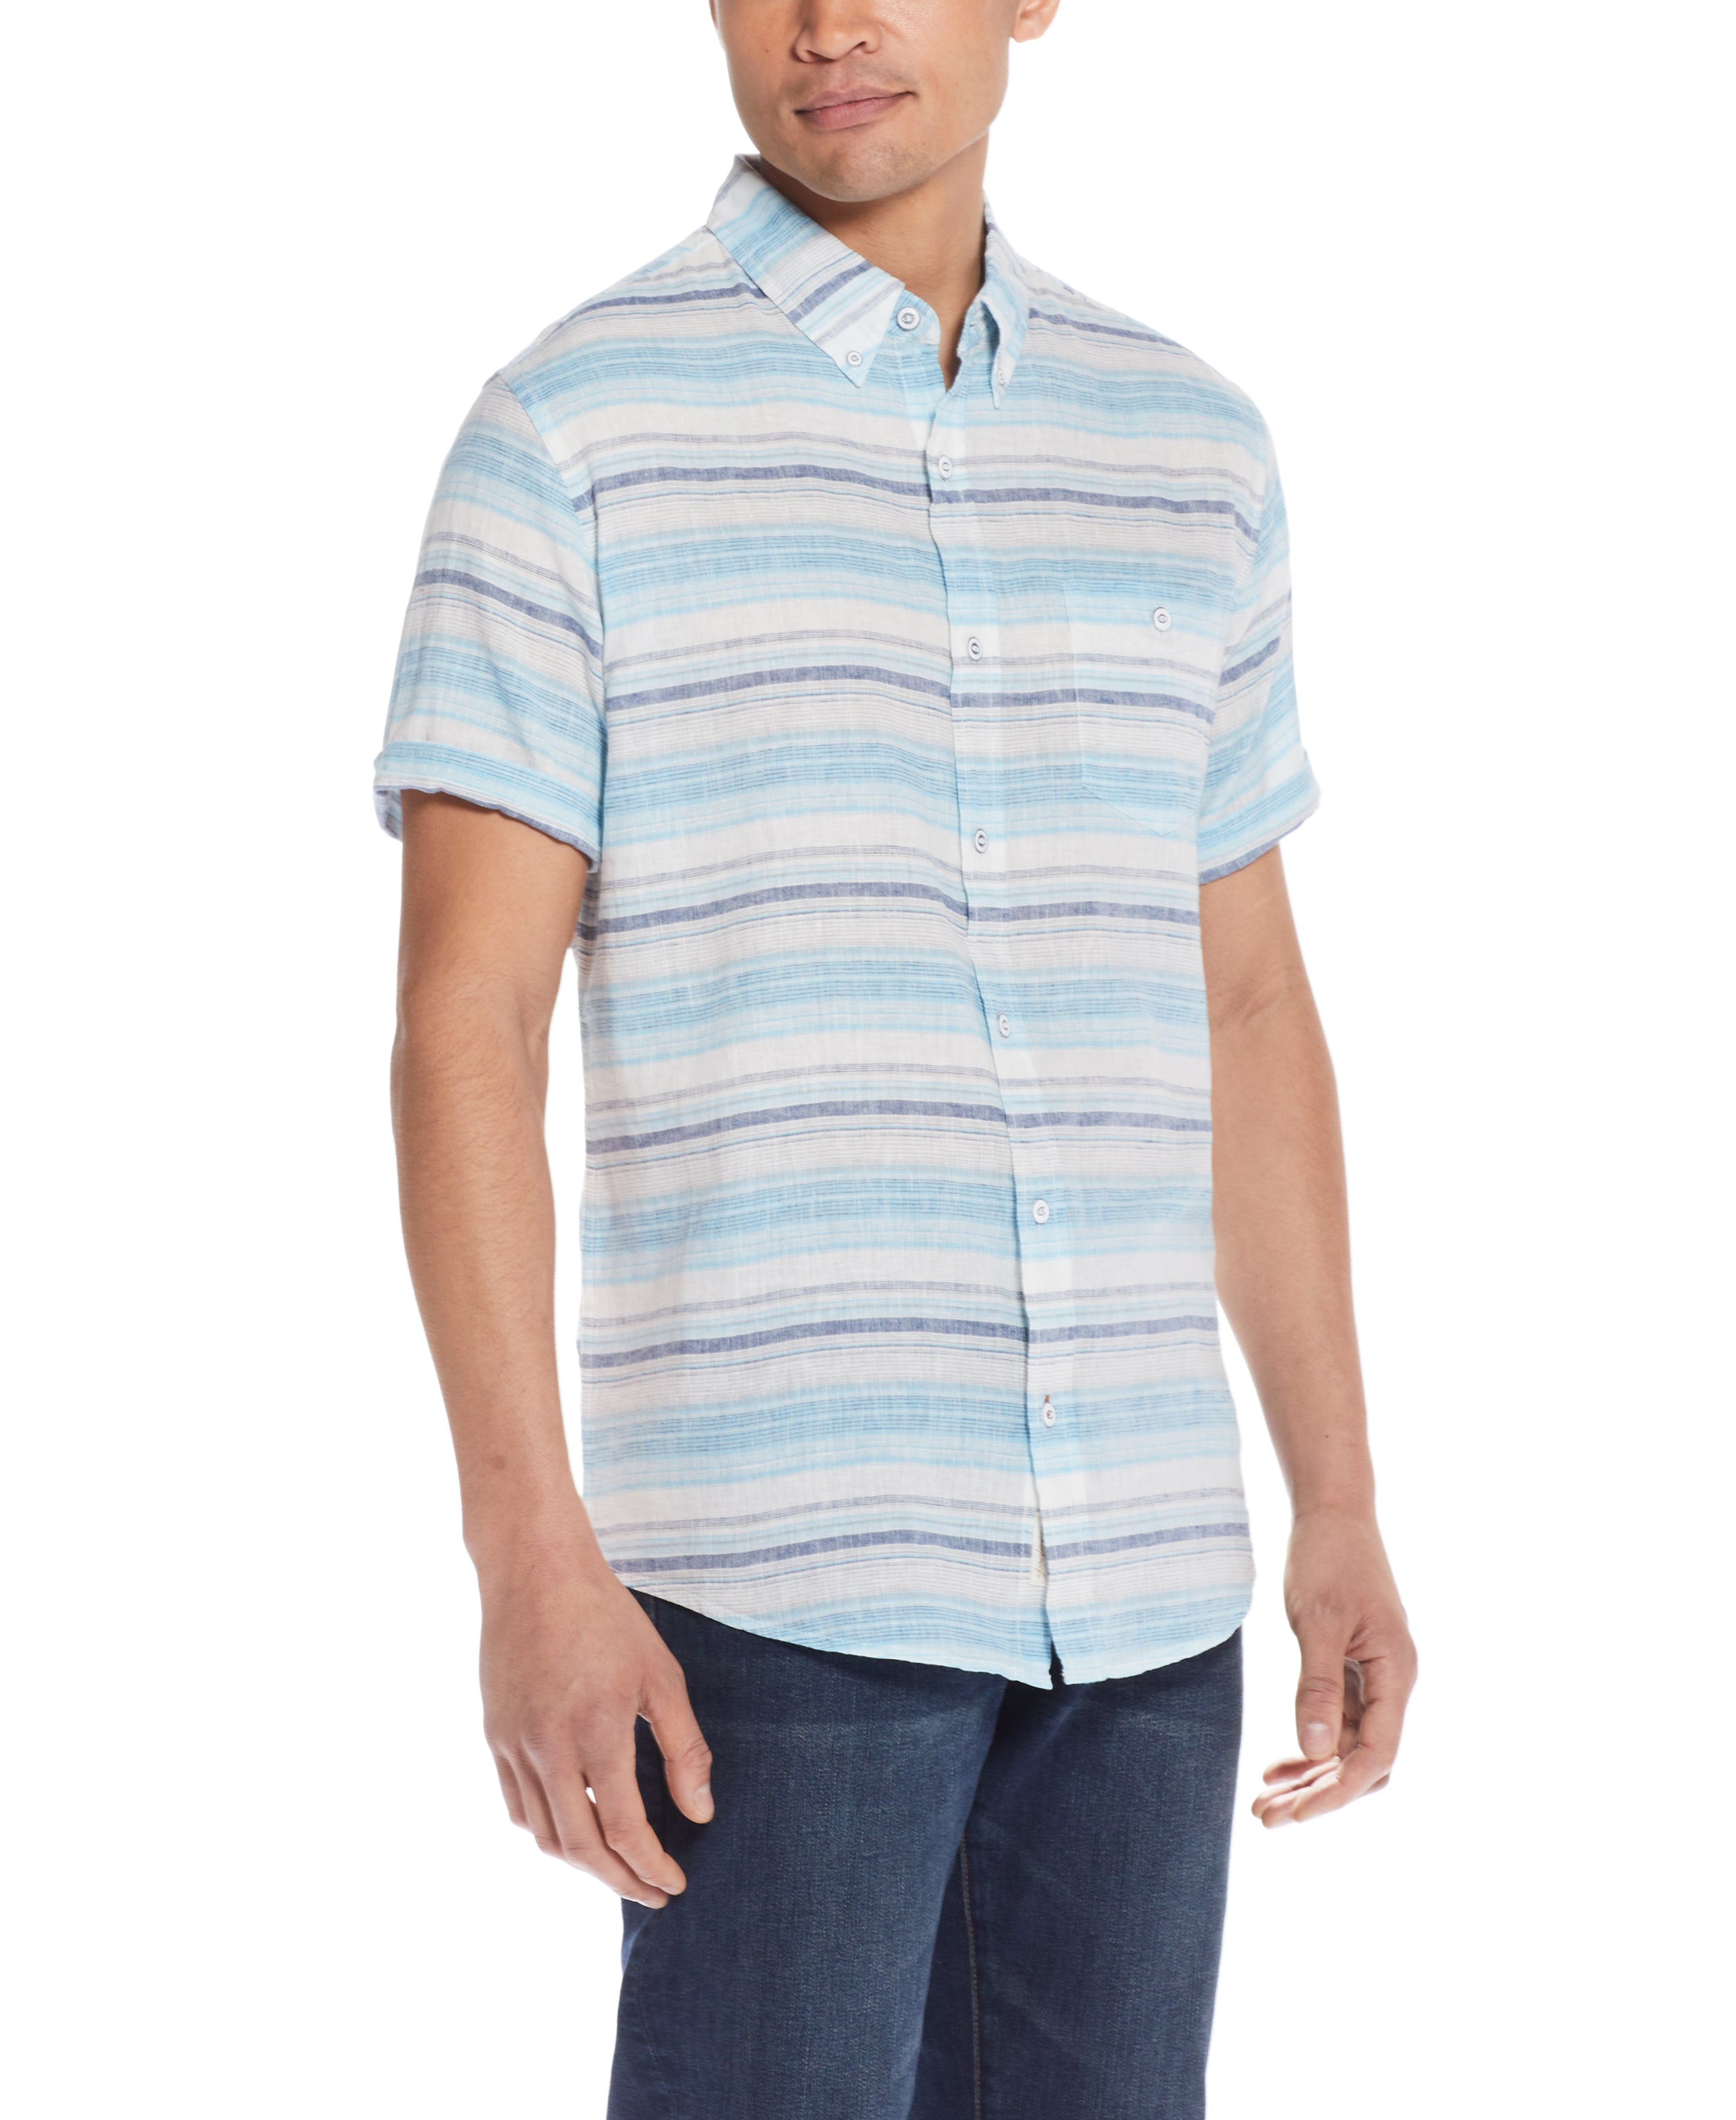 Stripe Linen Cotton Shirt in Soft Blue